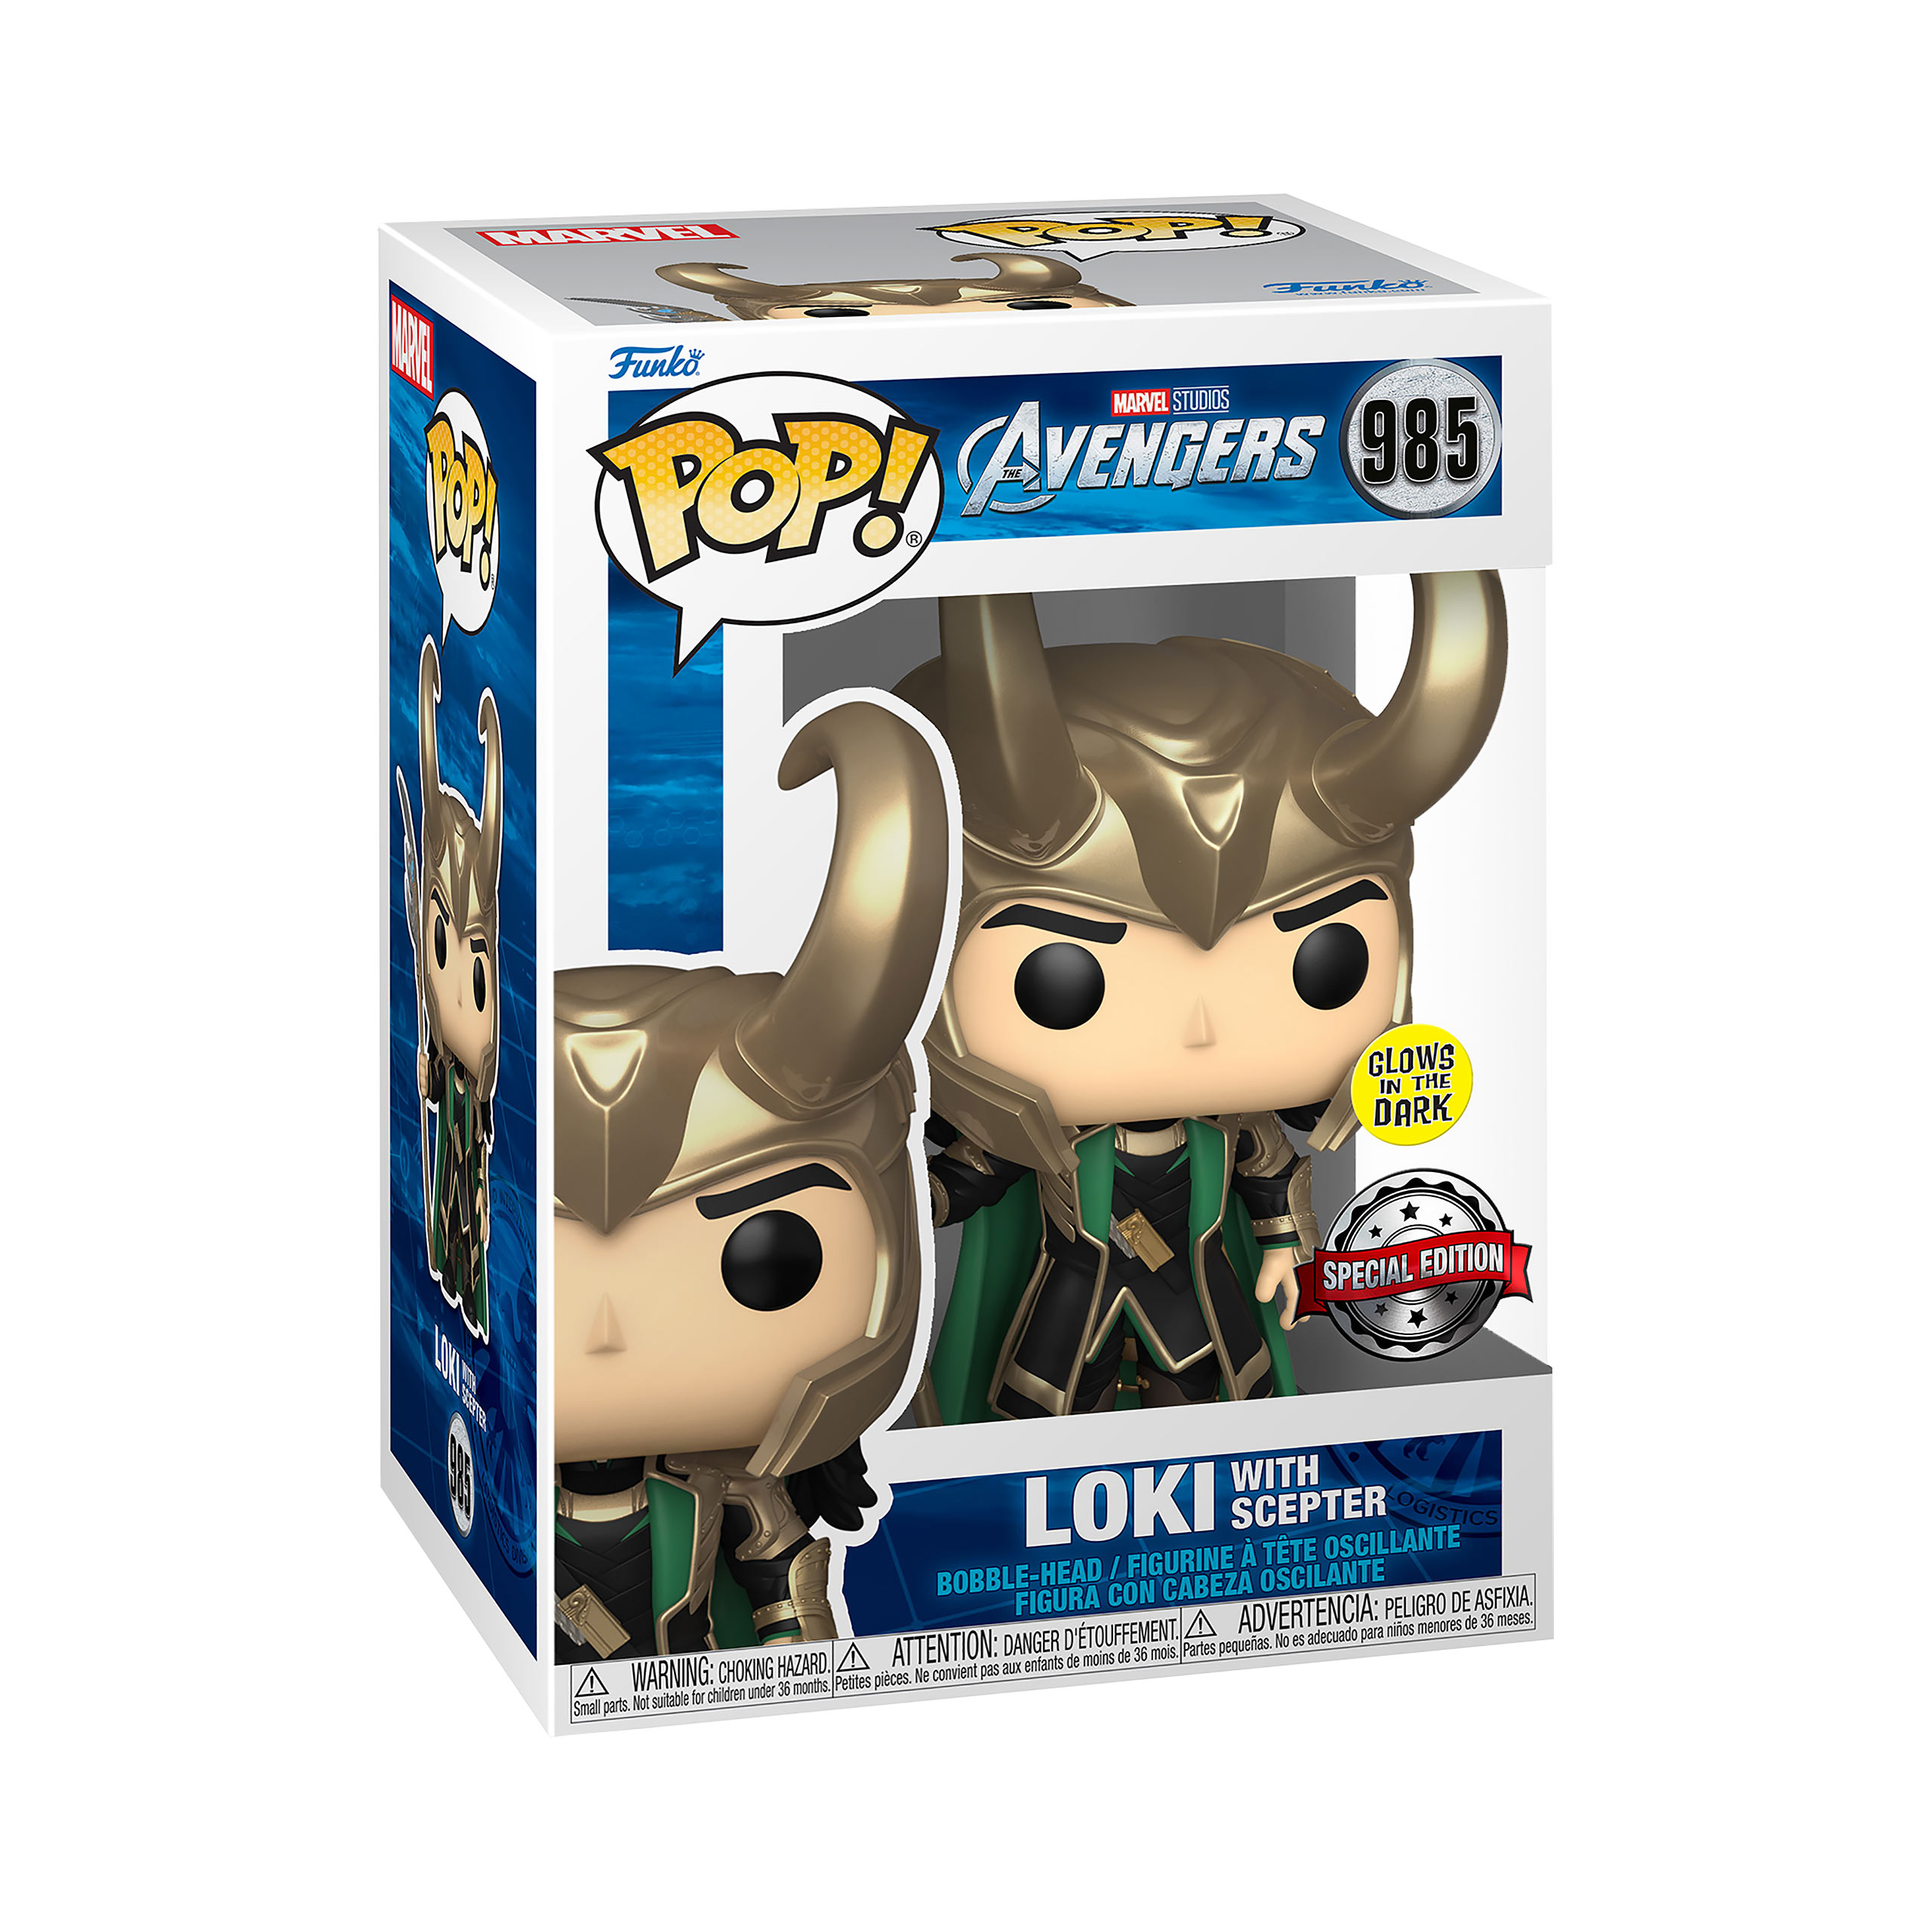 Marvel - Loki mit Zepter Funko Pop Figur